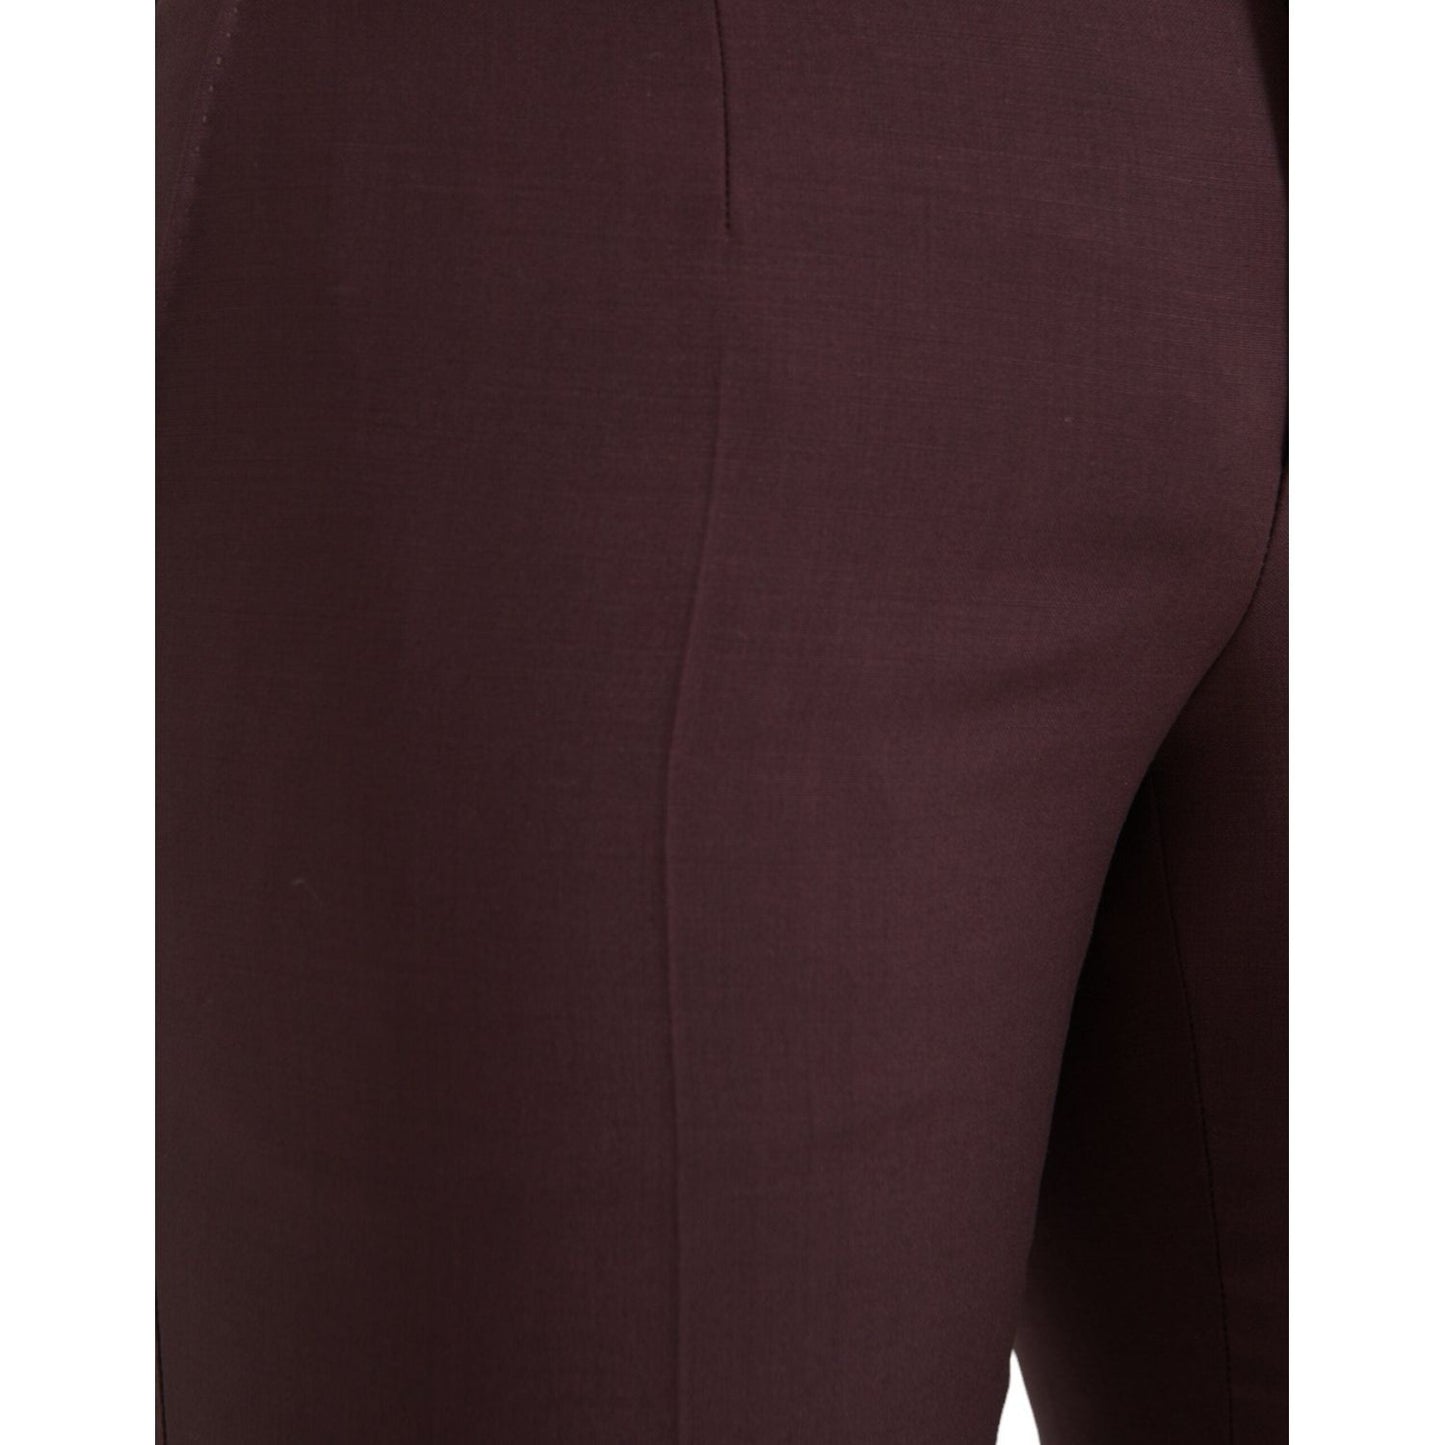 Dolce & Gabbana Maroon Wool Men Slim Fit Dress Pants maroon-wool-men-slim-fit-dress-pants